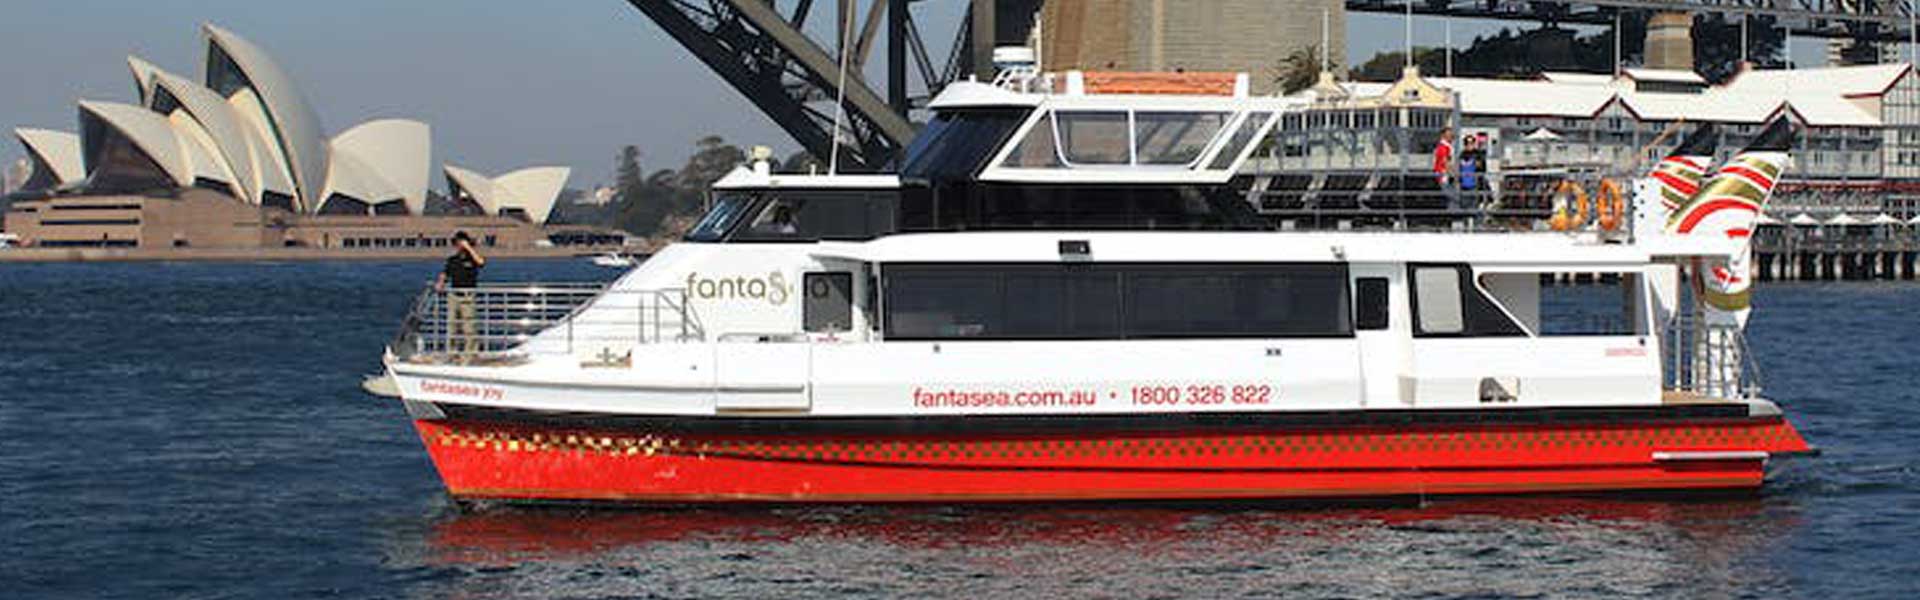 Fantasea Cruise Boat on Sydney Harbour